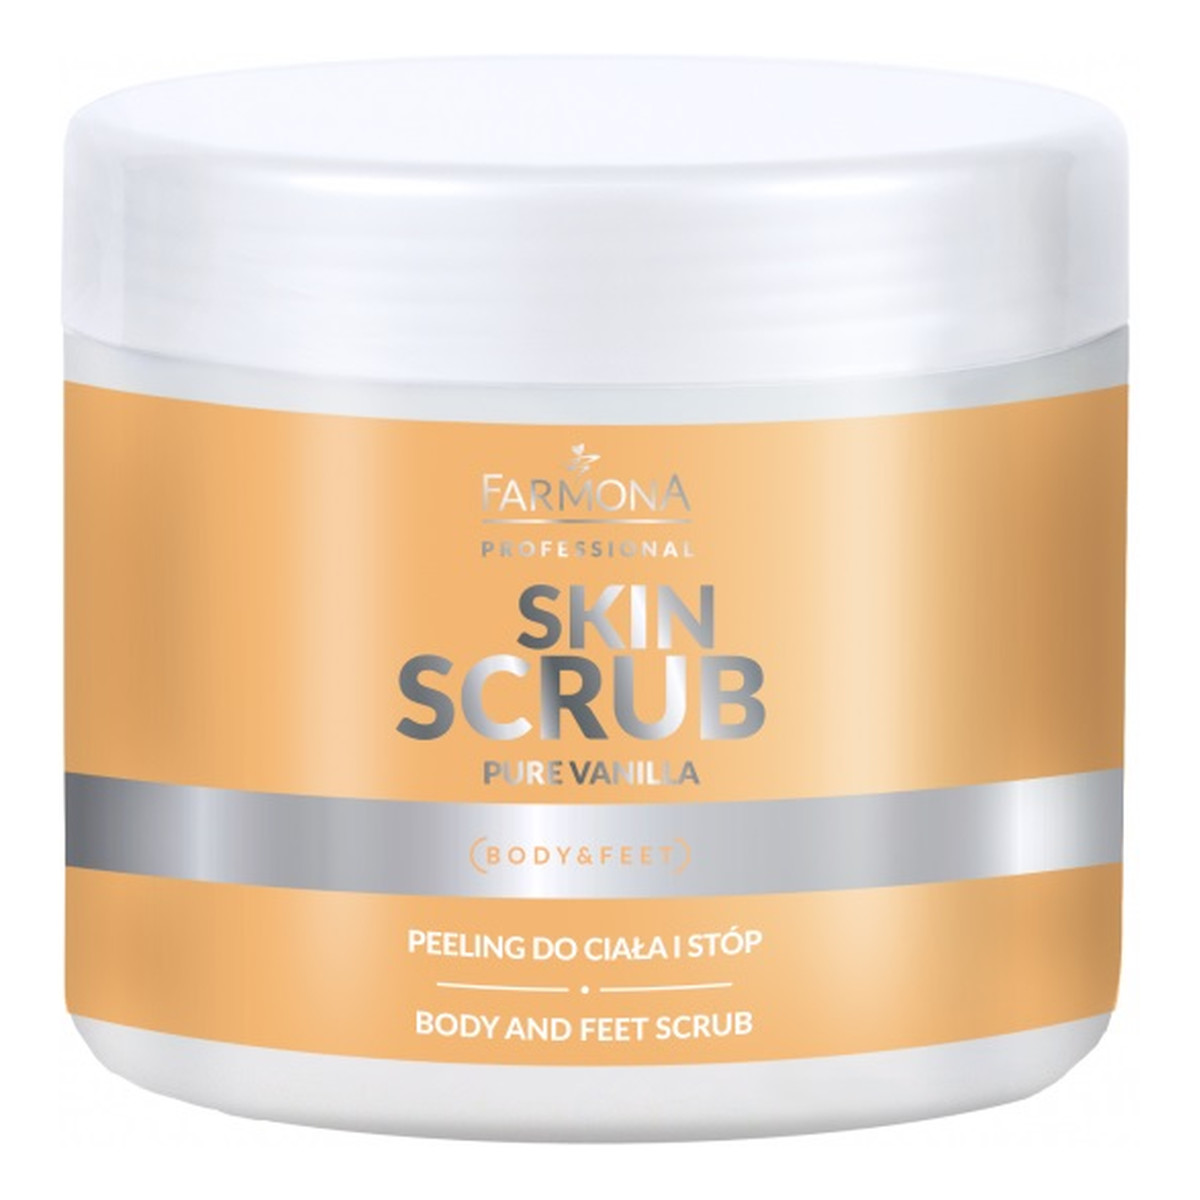 Farmona Professional Skin scrub pure vanilla peeling do ciała i stóp 500g